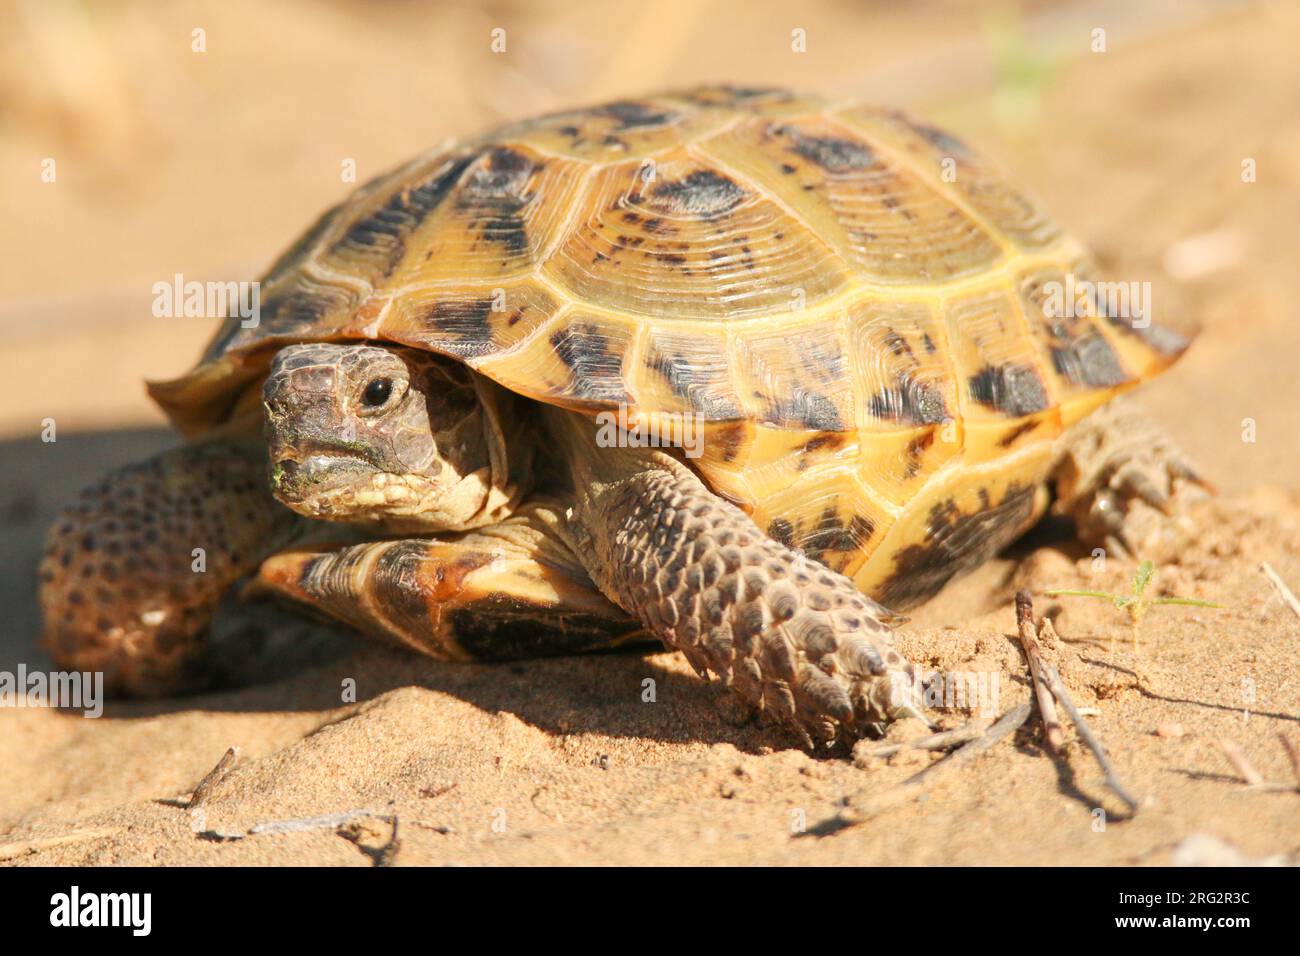 Russian tortoise (Testudo horsfieldii) on the ground, against an orange background, in Kazakhstan. Stock Photo